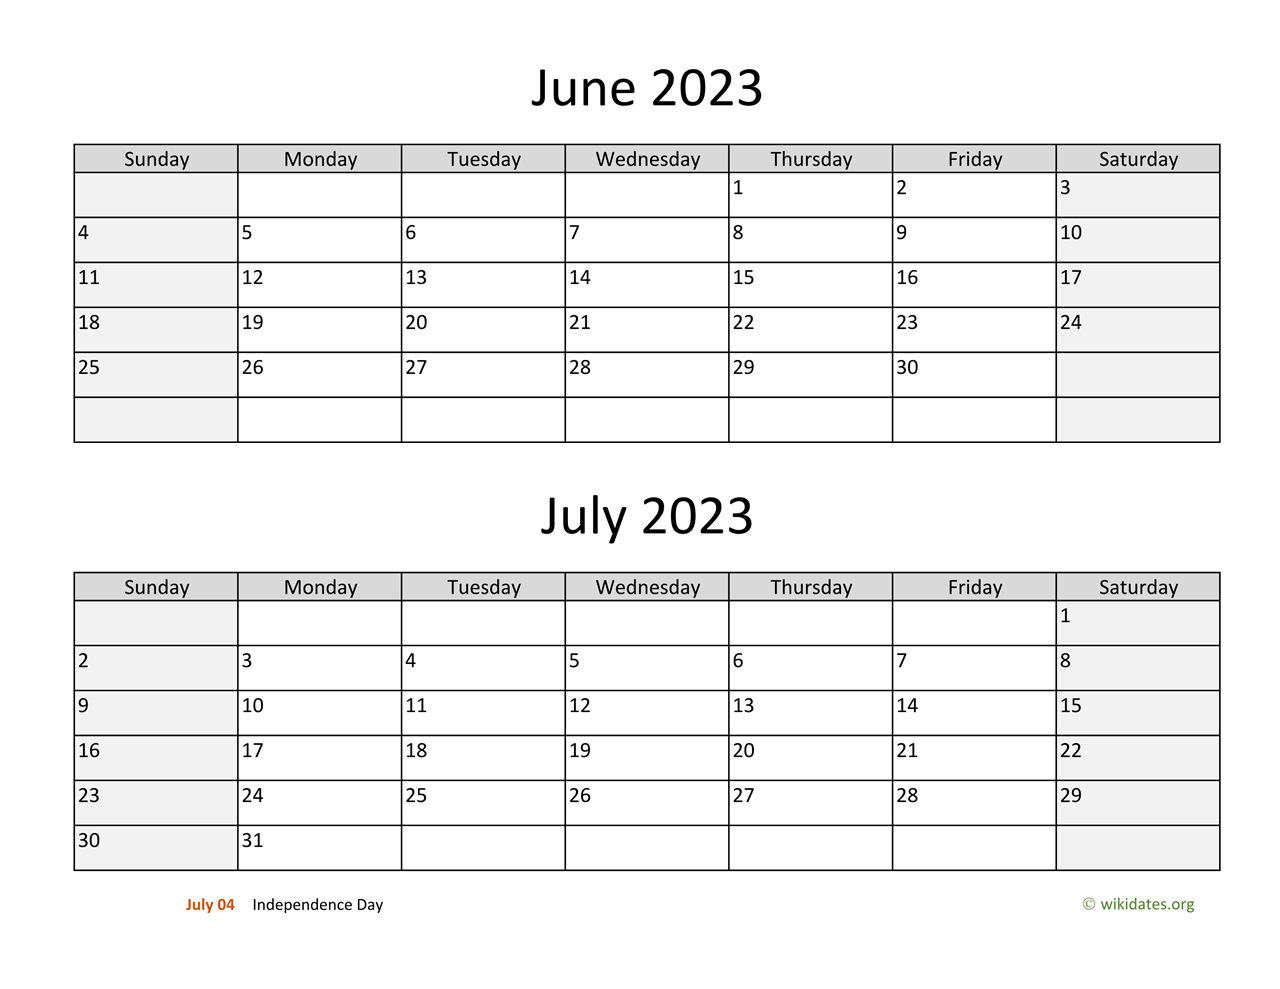 June And July 2023 Calendar Get Calendar 2023 Update